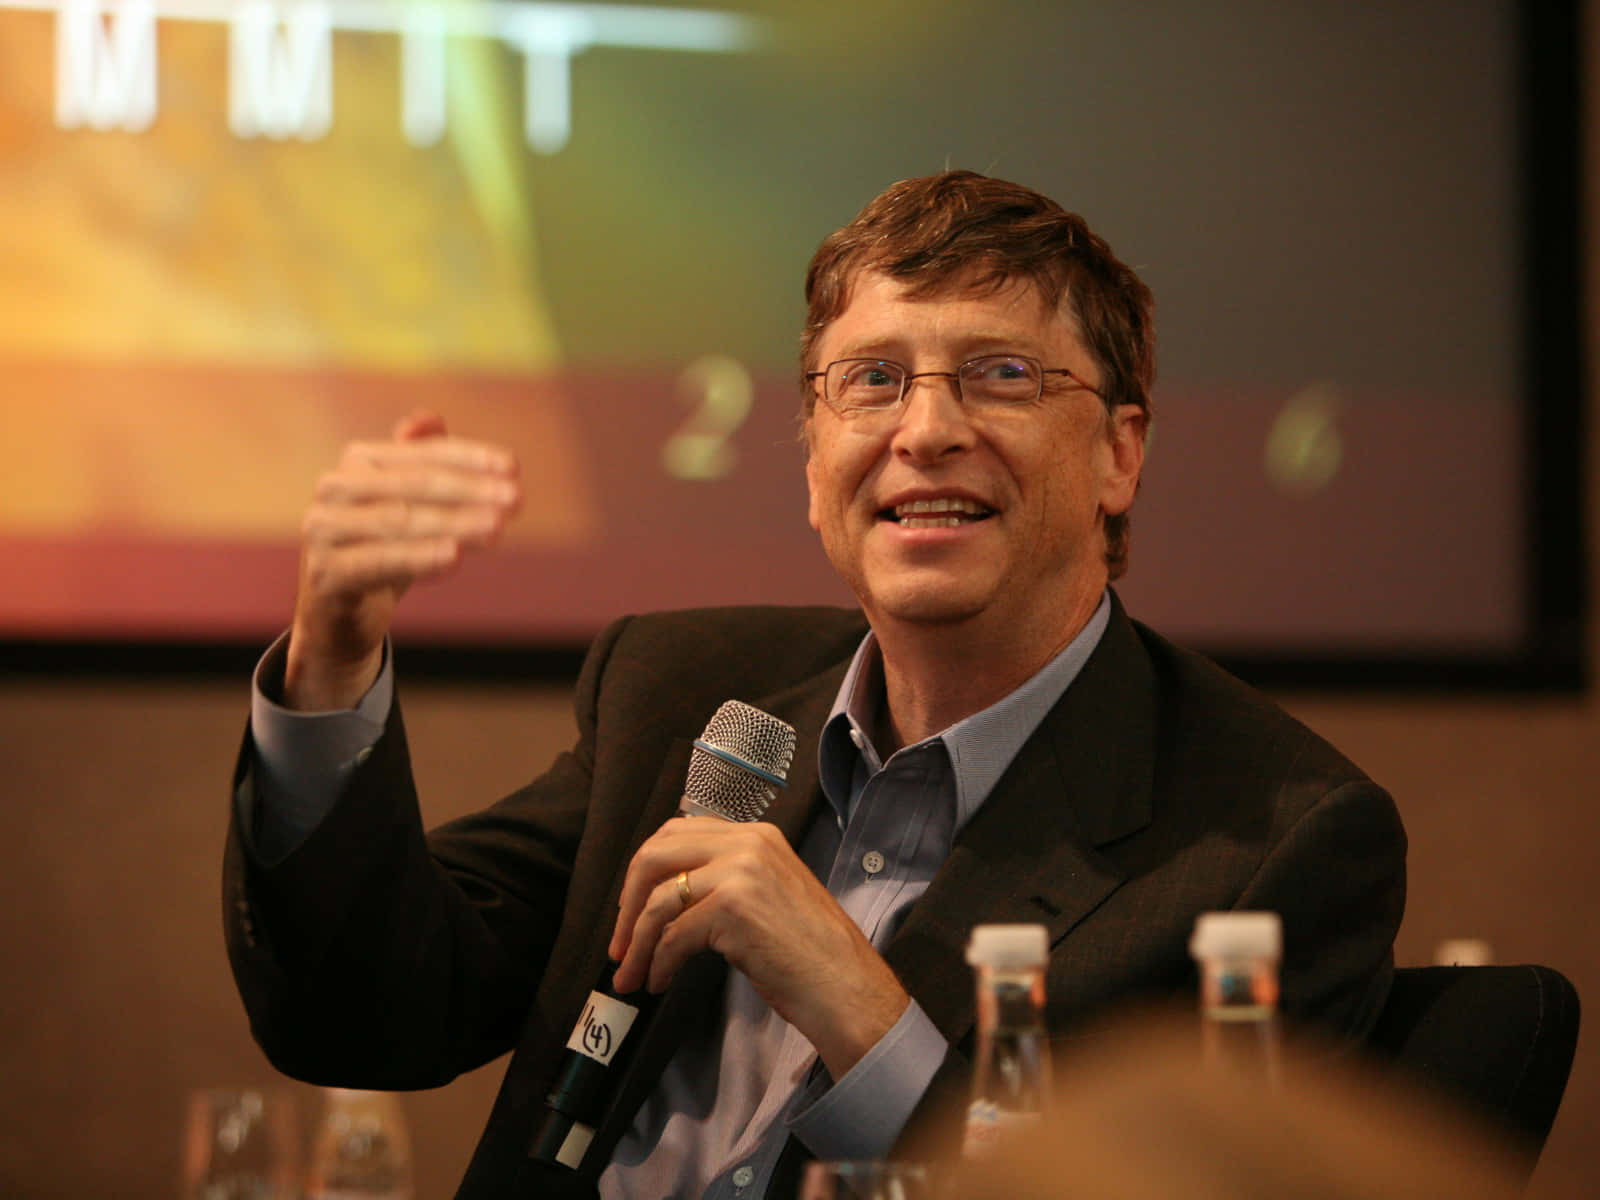 Bill Gates - Microsoft Founder&Philanthropist